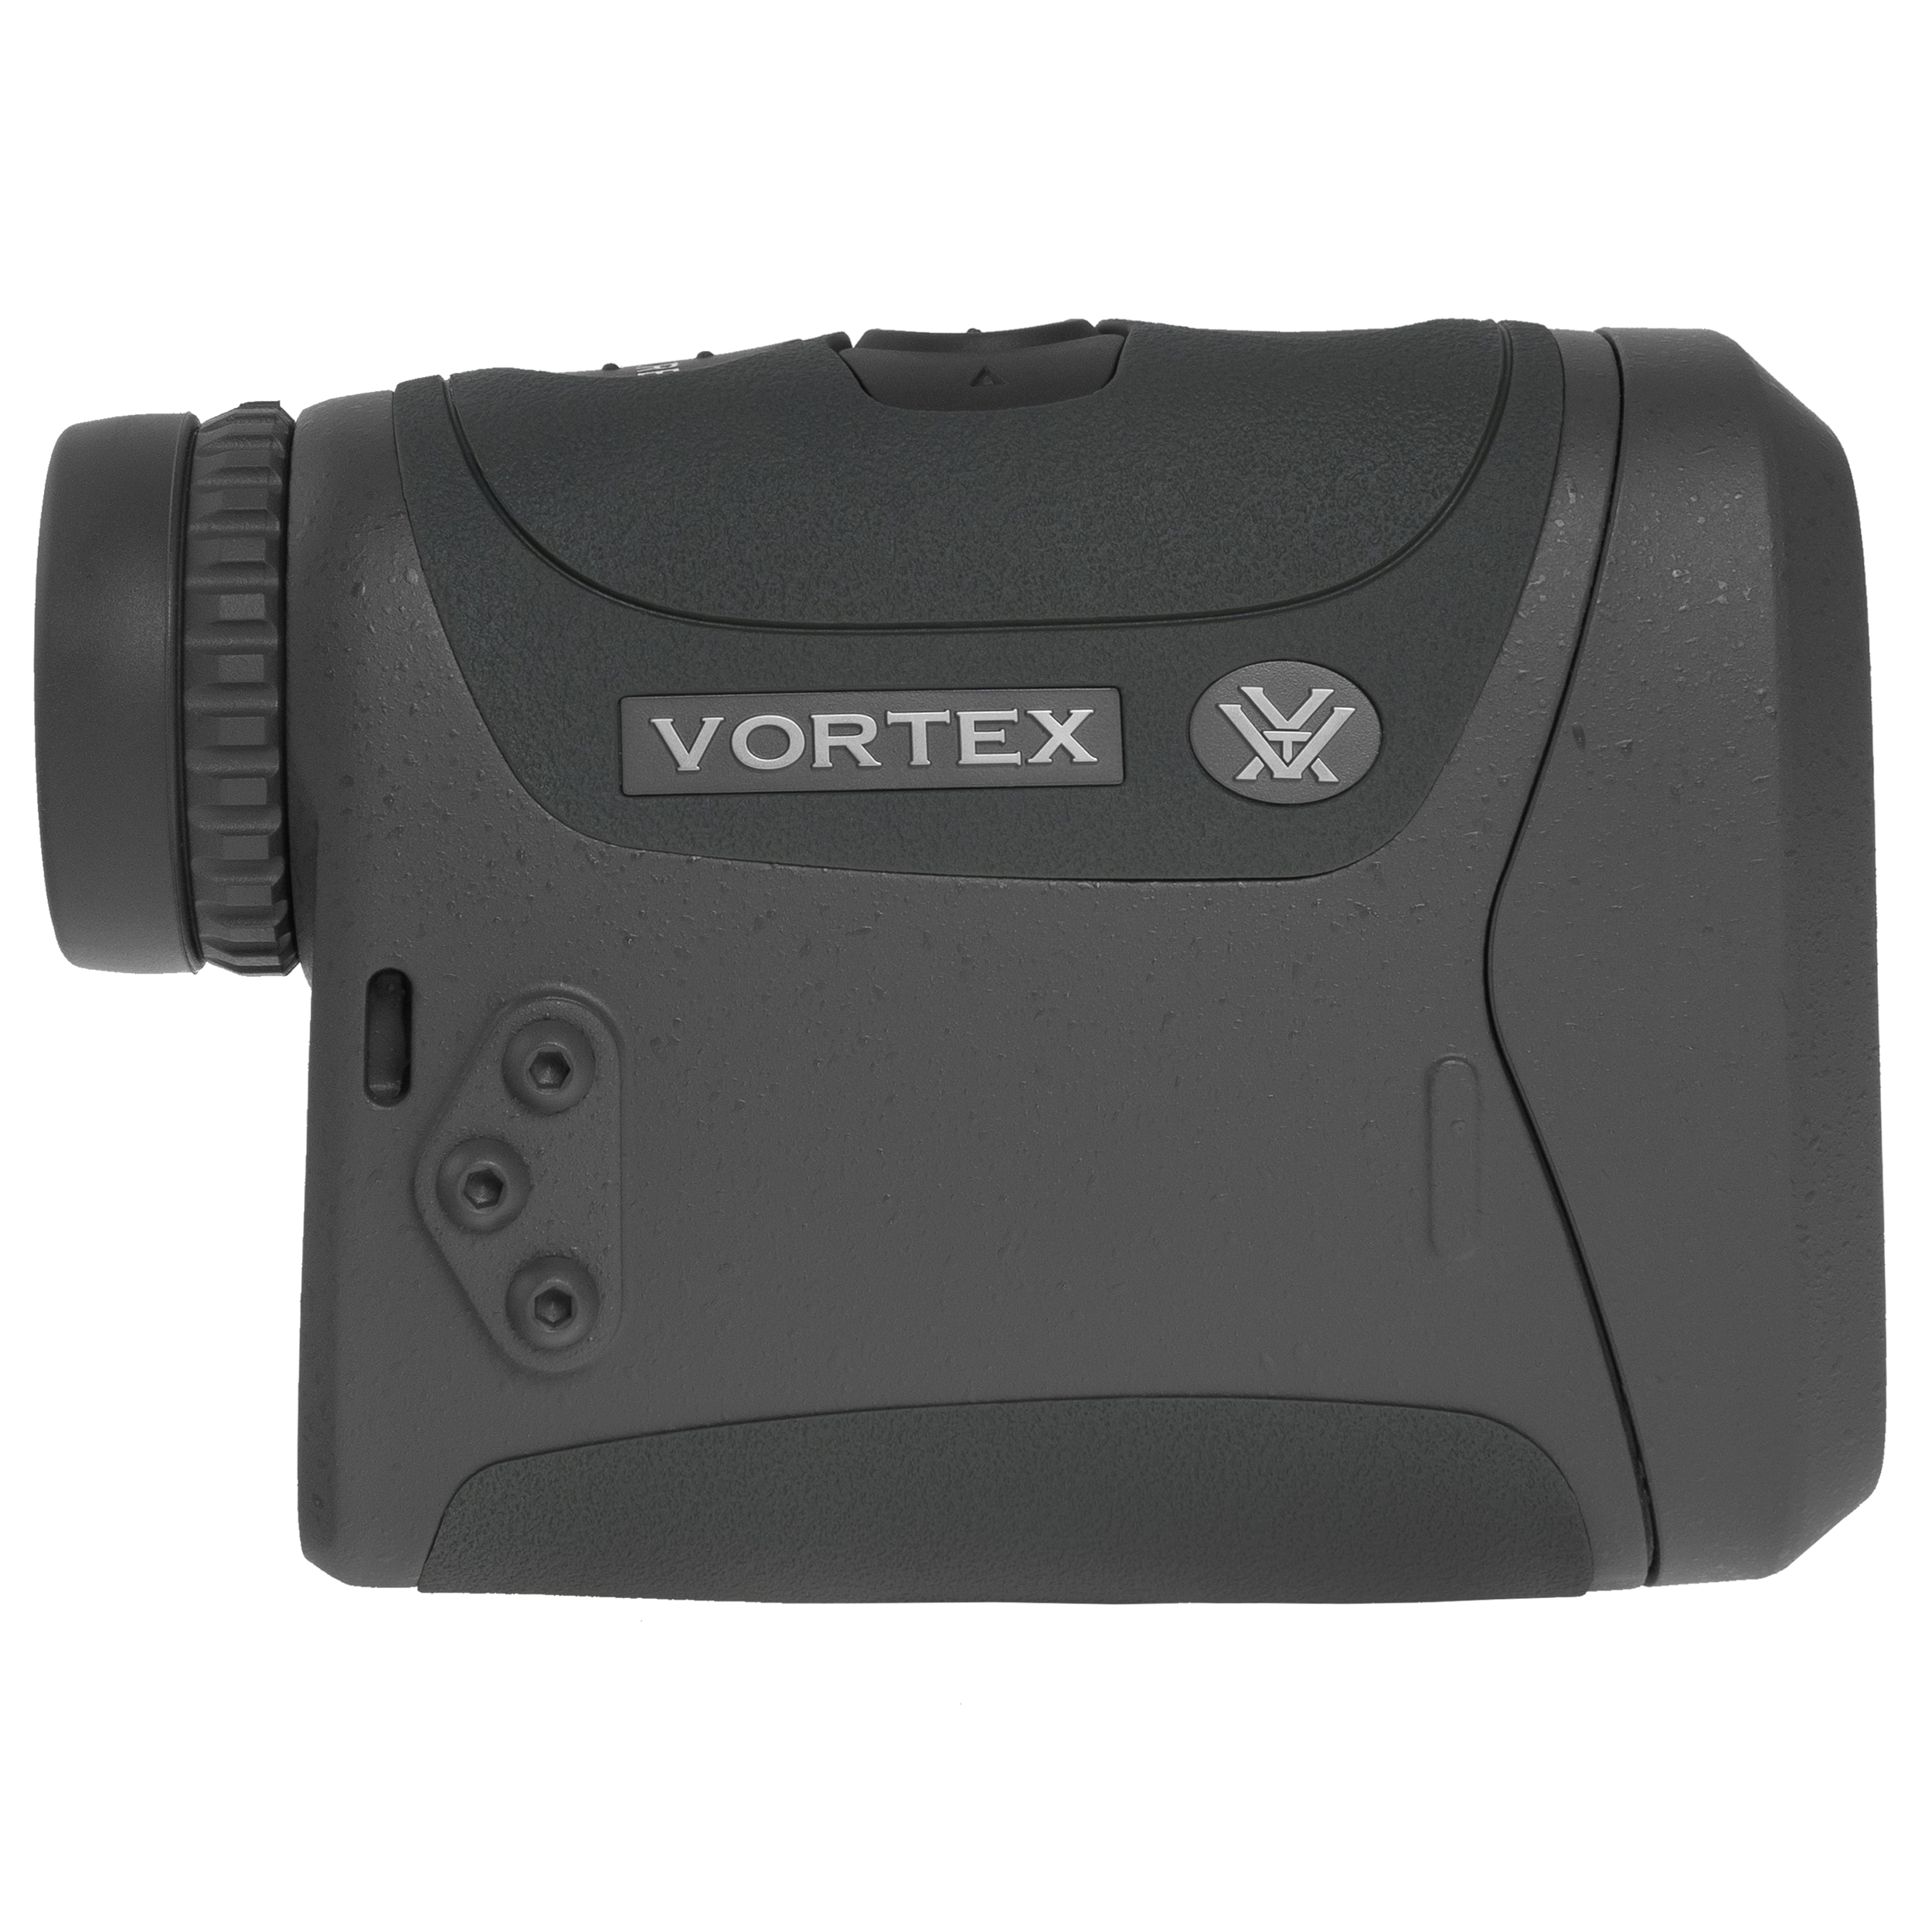 Dalmierz laserowy Vortex Razor HD4000 GB